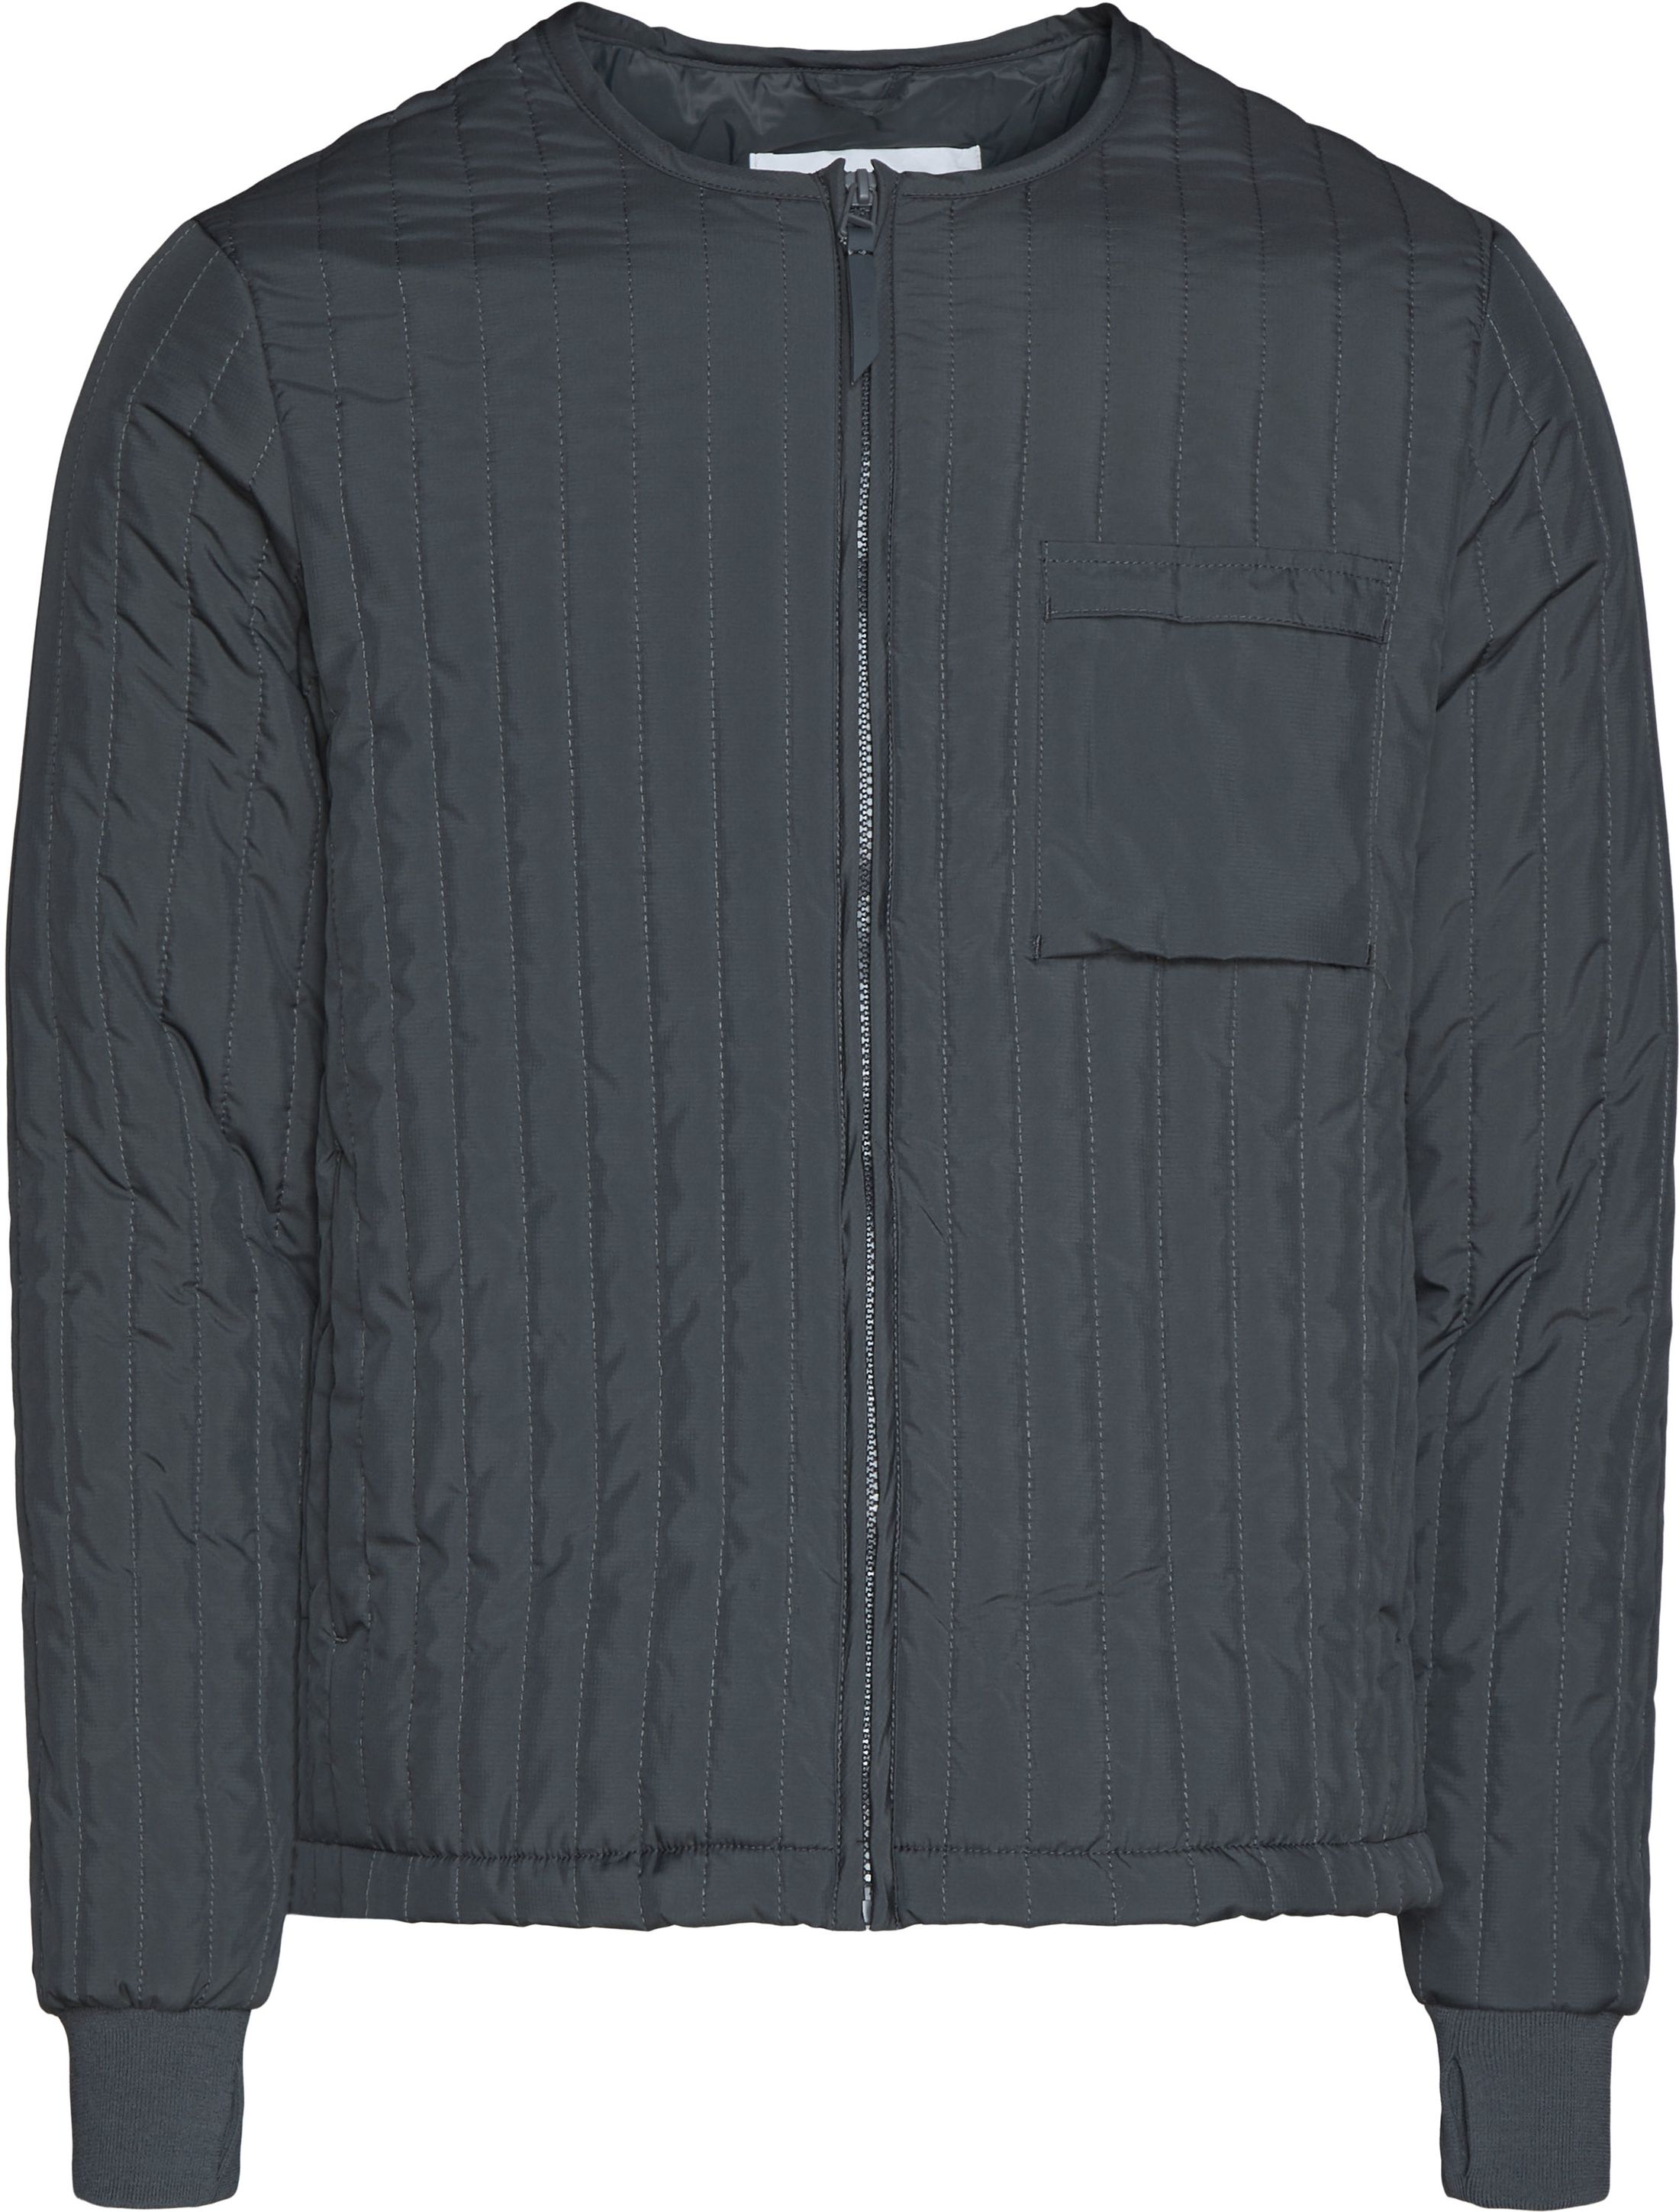 Rains Liner Jacket Slate Grey size S/M